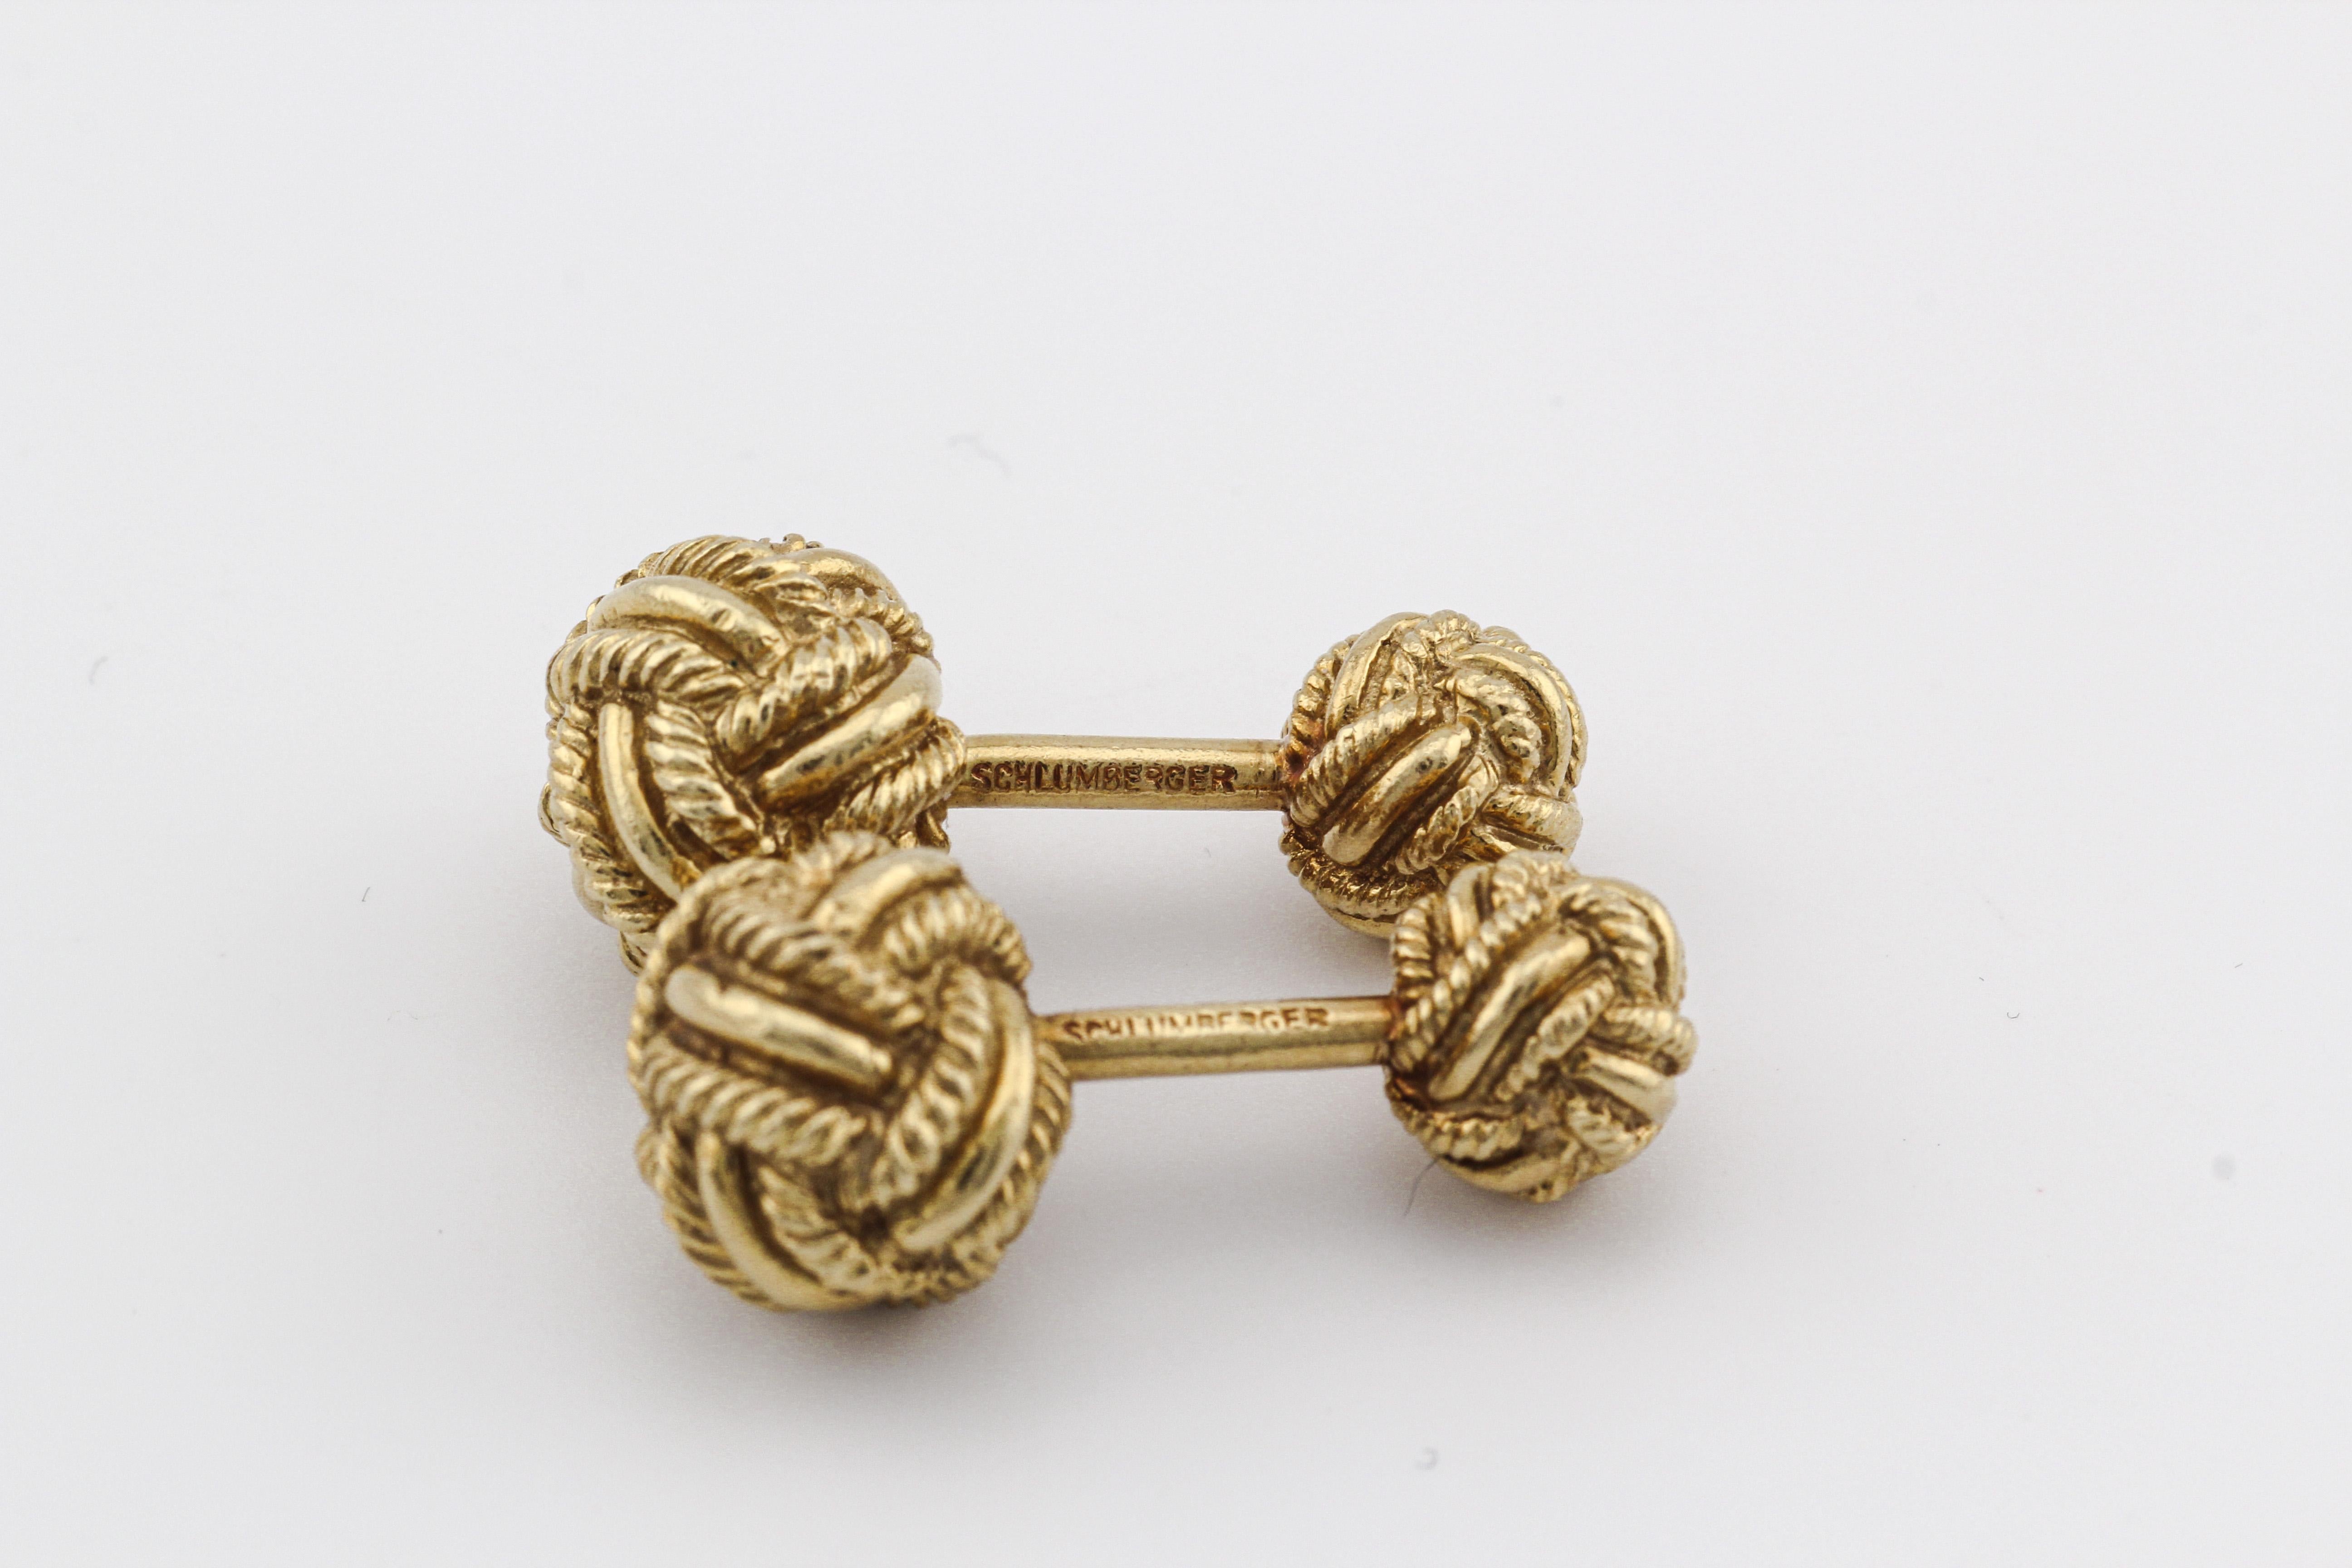 Tiffany & Co. Schlumberger Vintage 18K Yellow Gold Knot Cufflinks 4 Studs Set 2